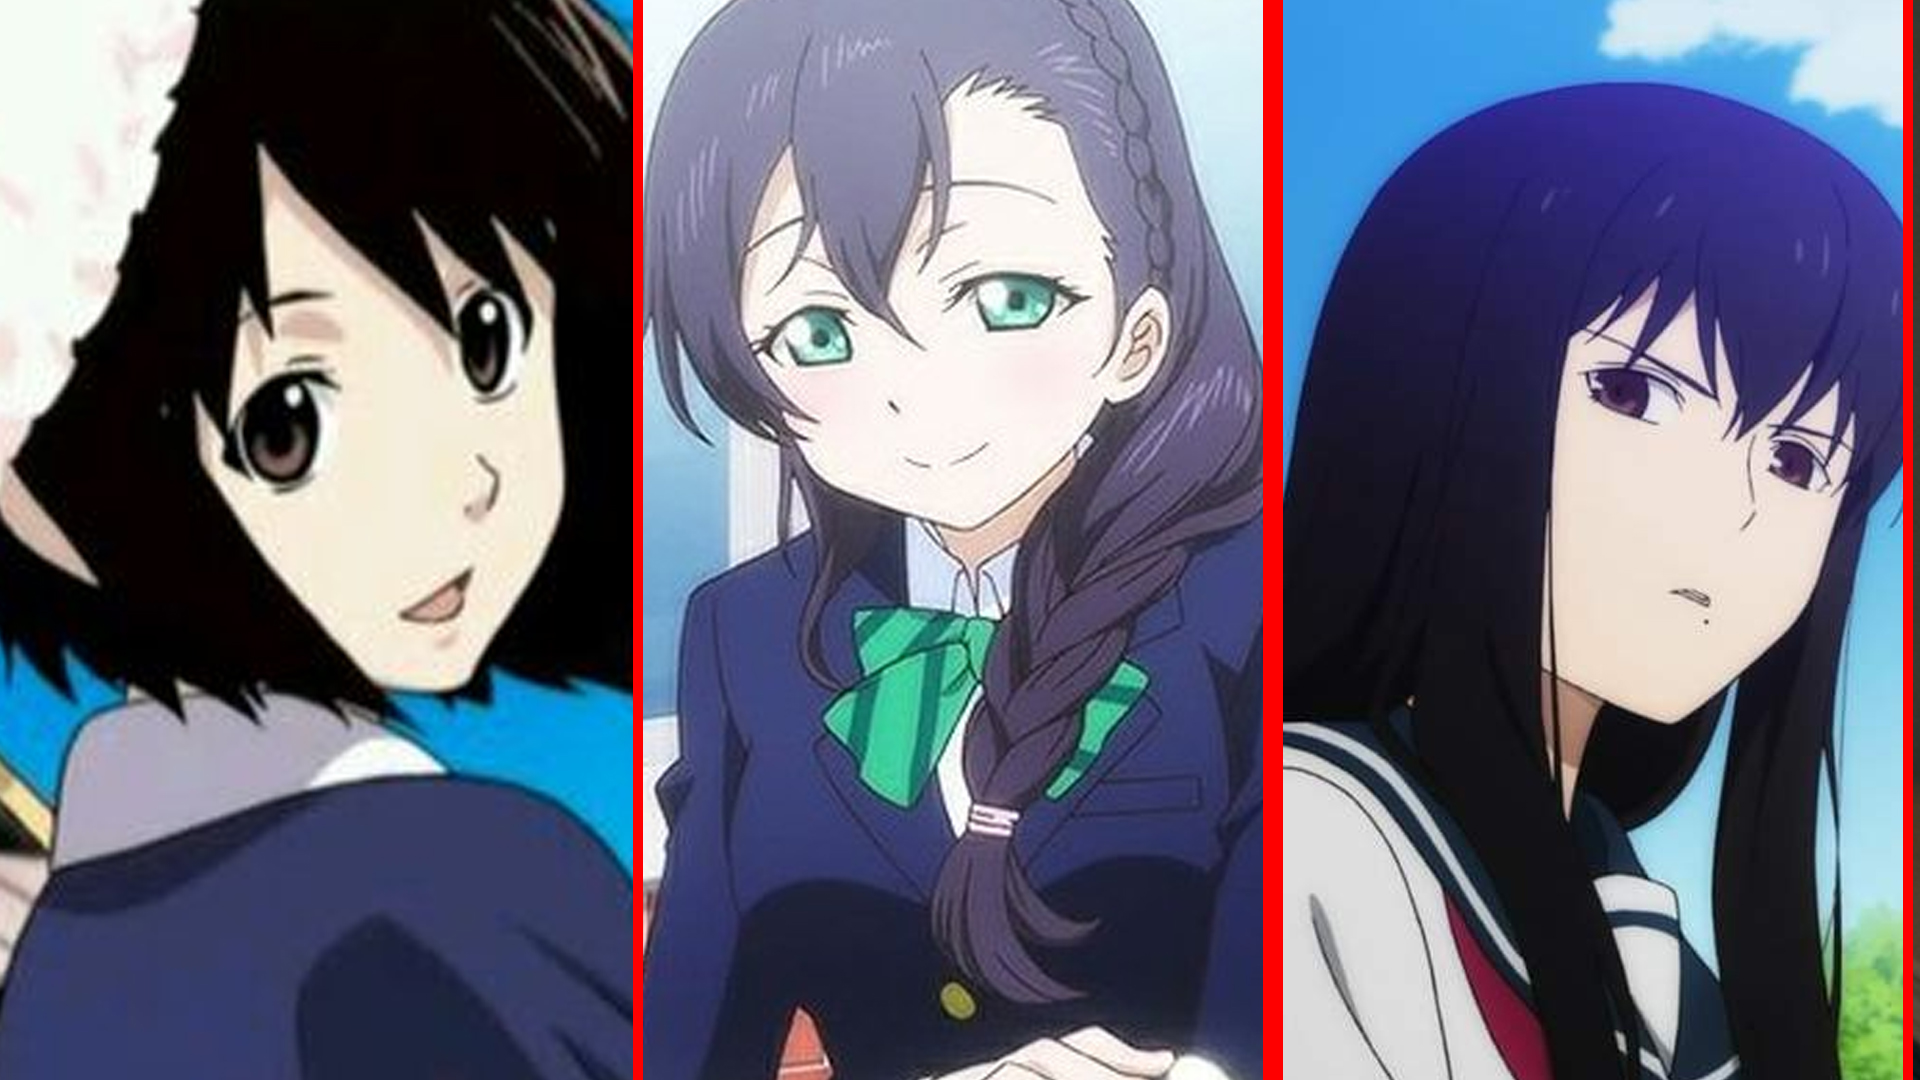 HD wallpaper Yui and Yukinoshita 2 2 girl anime character in uniform  myteenromanticcomedysnafu  Wallpaper Flare